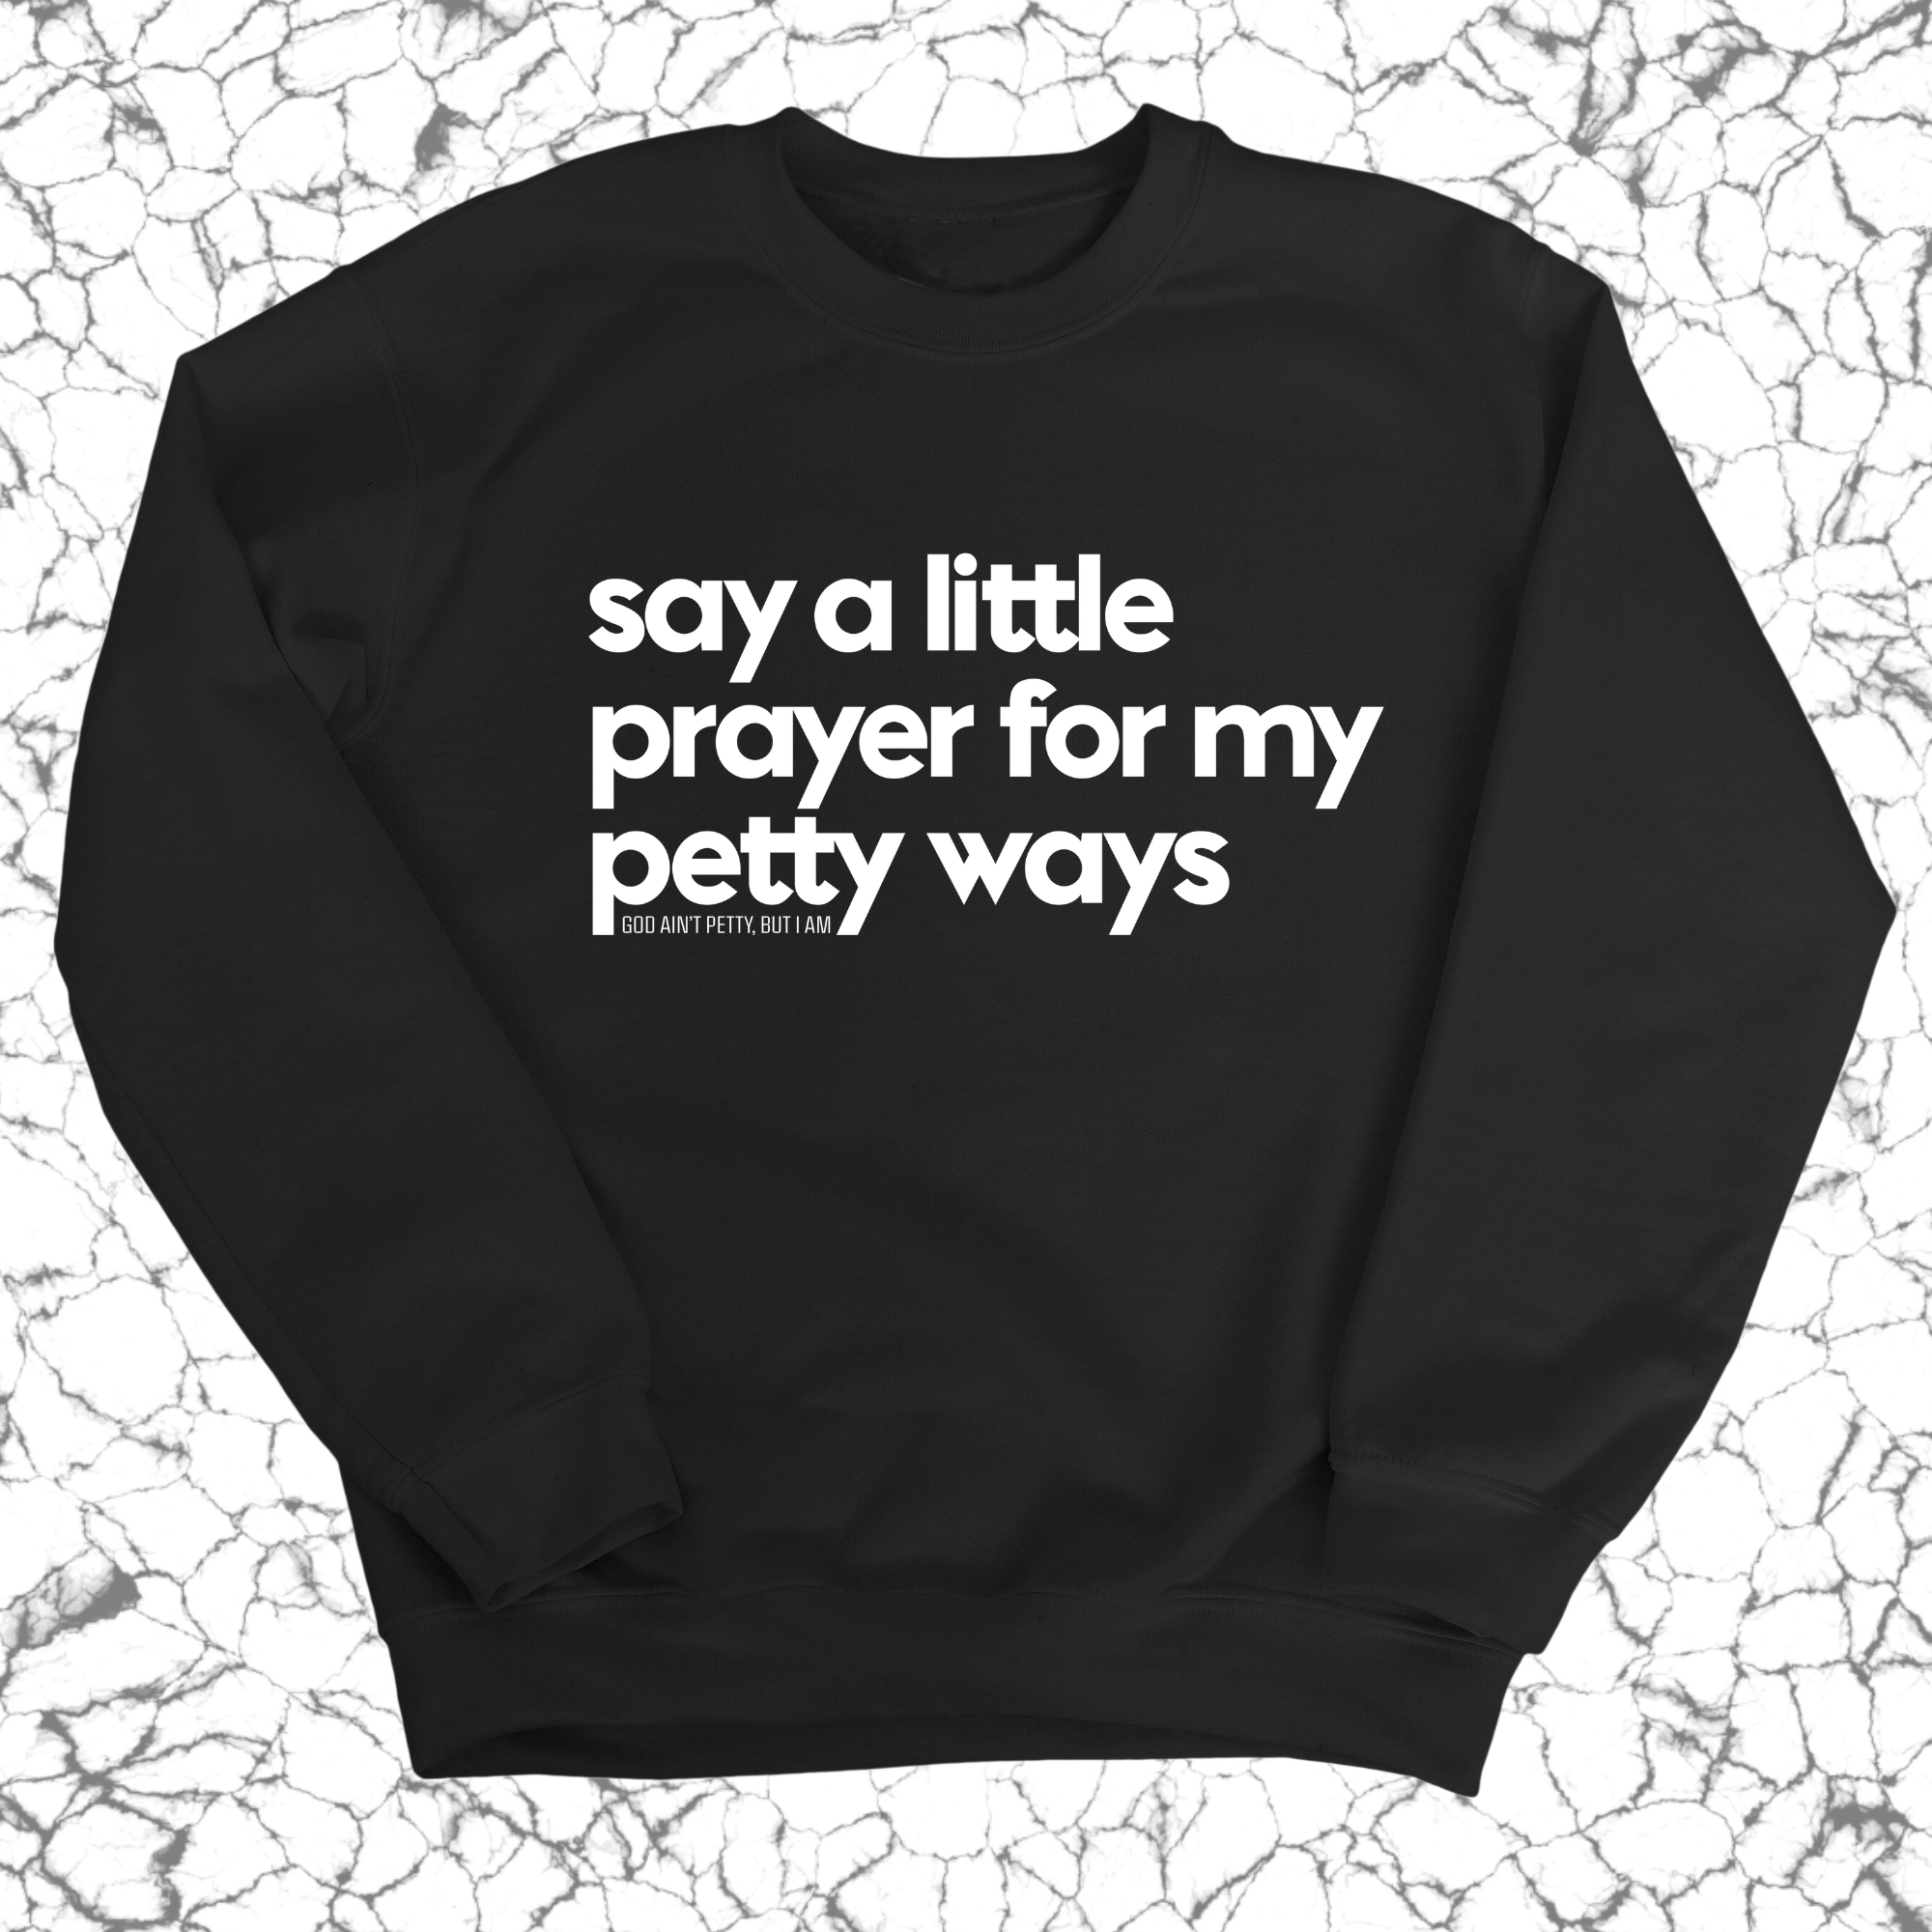 Say a little prayer for my petty ways Unisex Sweatshirt-Sweatshirt-The Original God Ain't Petty But I Am